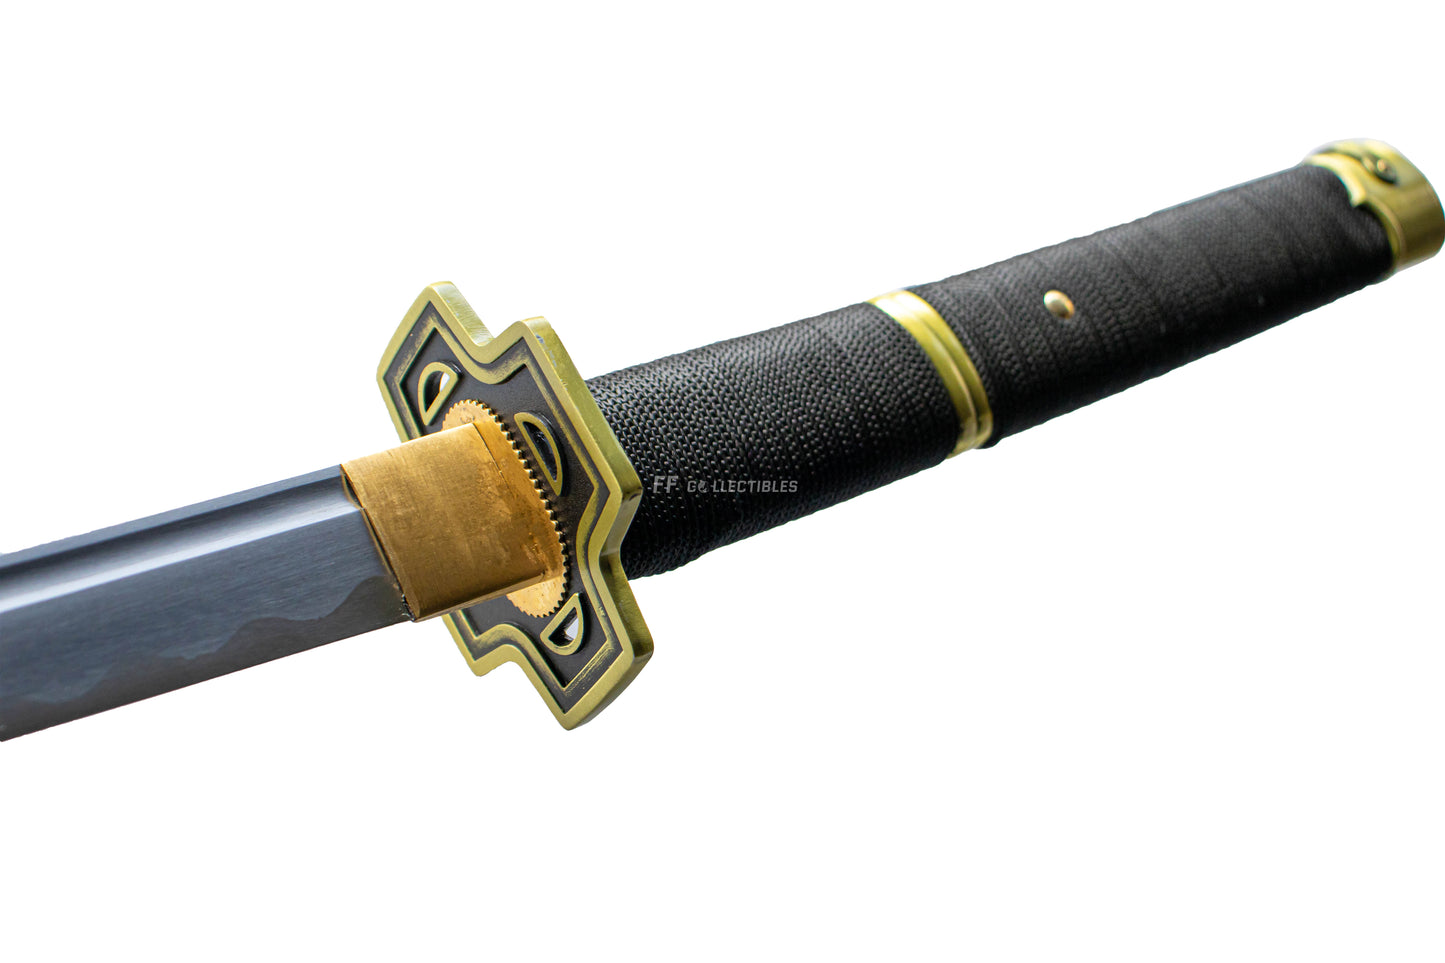 ONE PIECE – YUBASHIRI, THE SWORD OF RORONOA ZORO (w FREE sword stand)